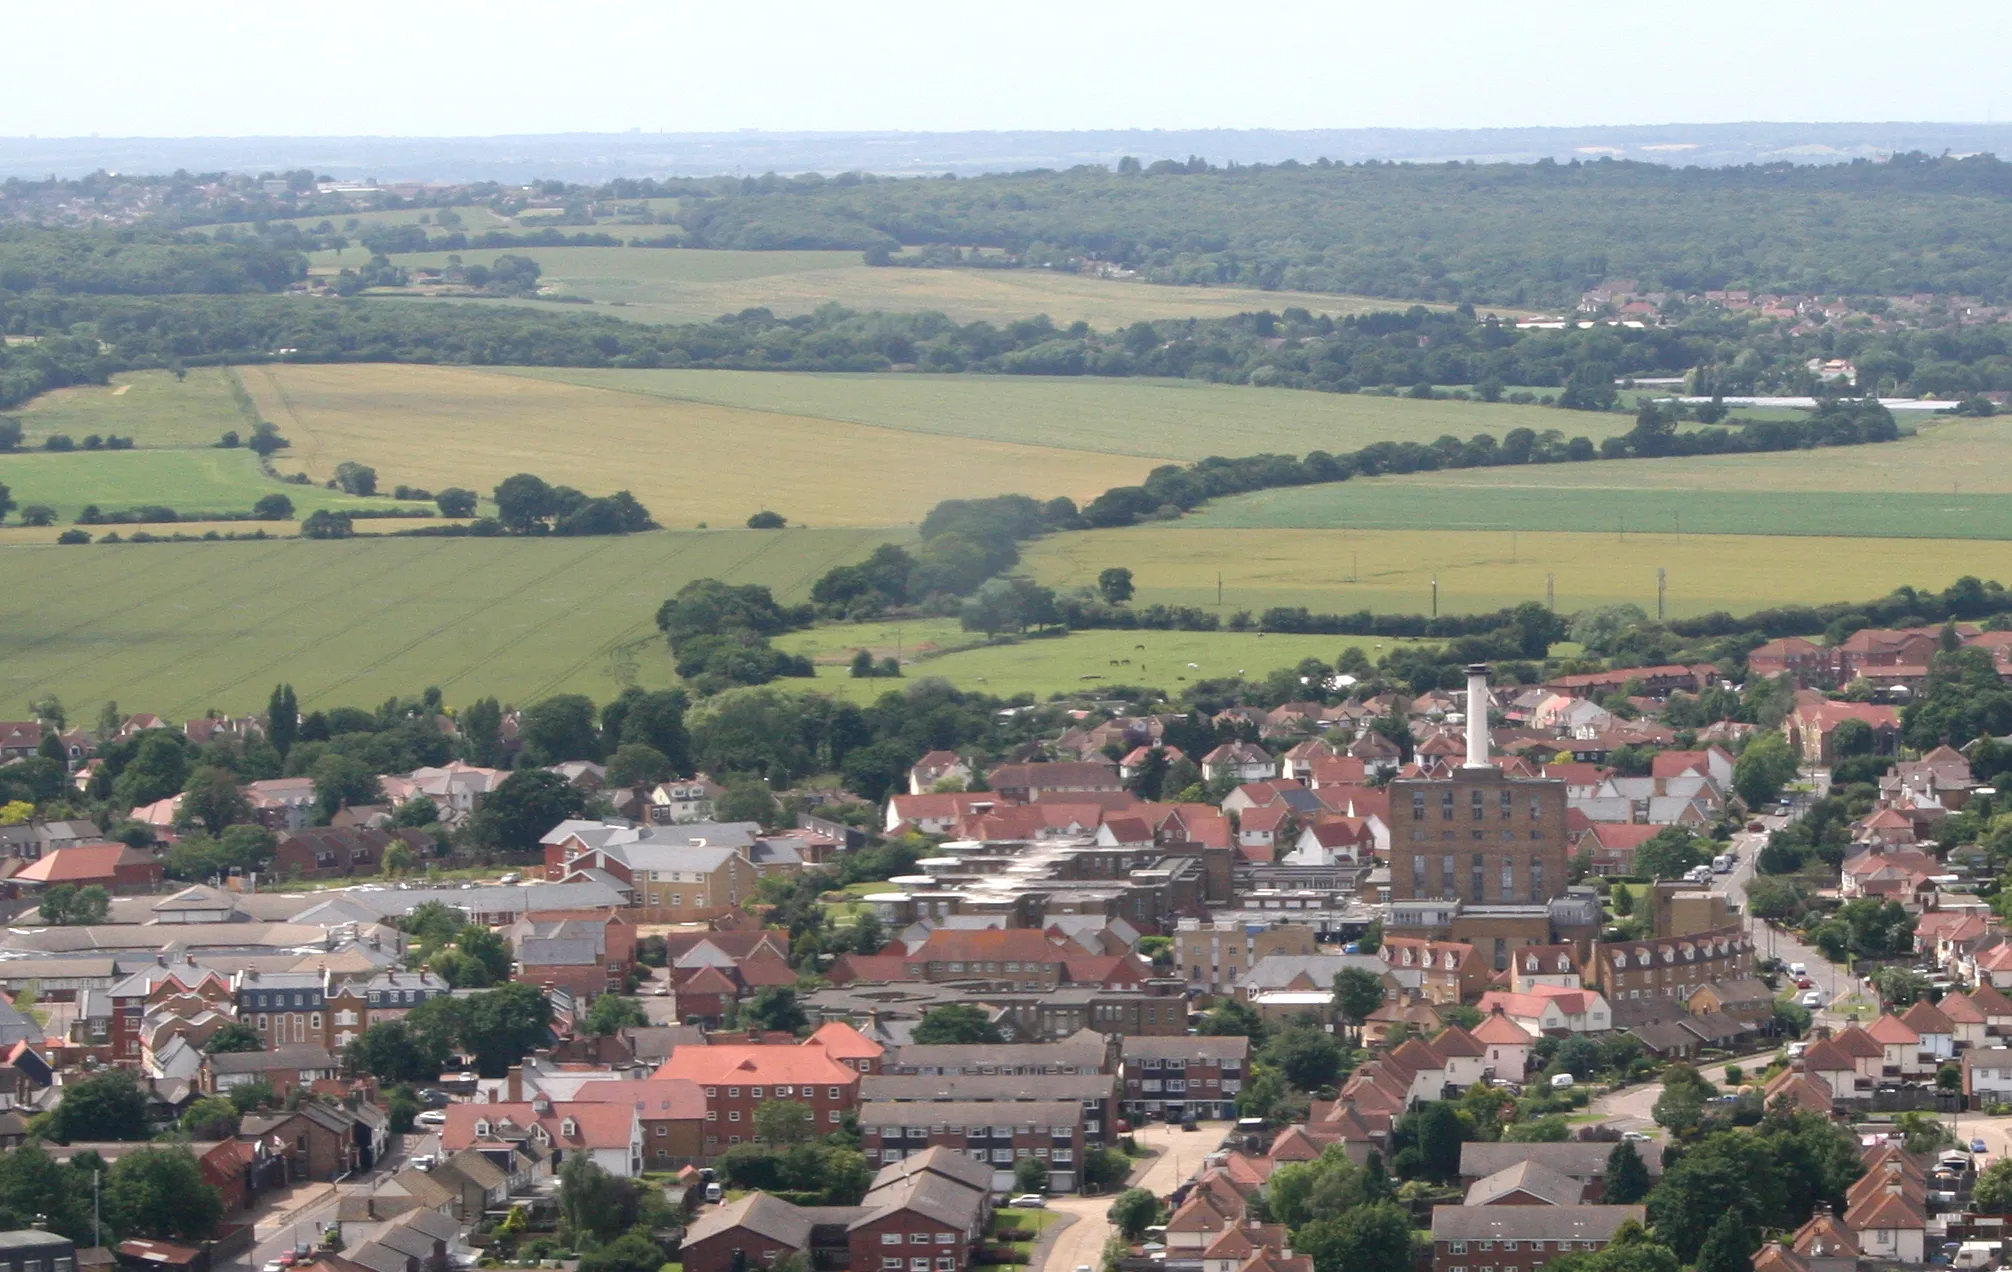 Image of Essex